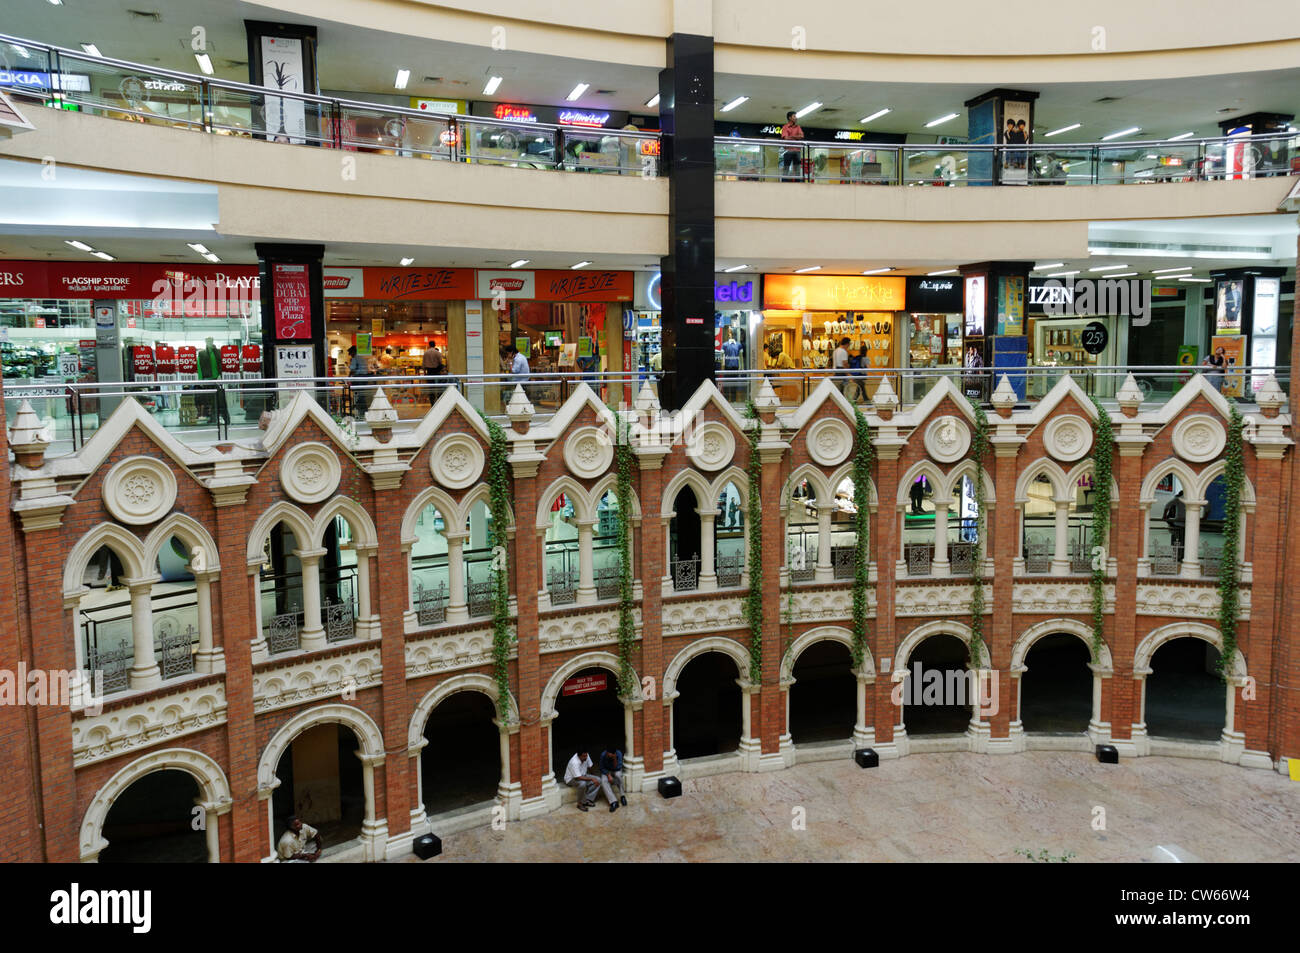 Spencer Plaza shopping mall in Chennai (Madras) India Stock Photo